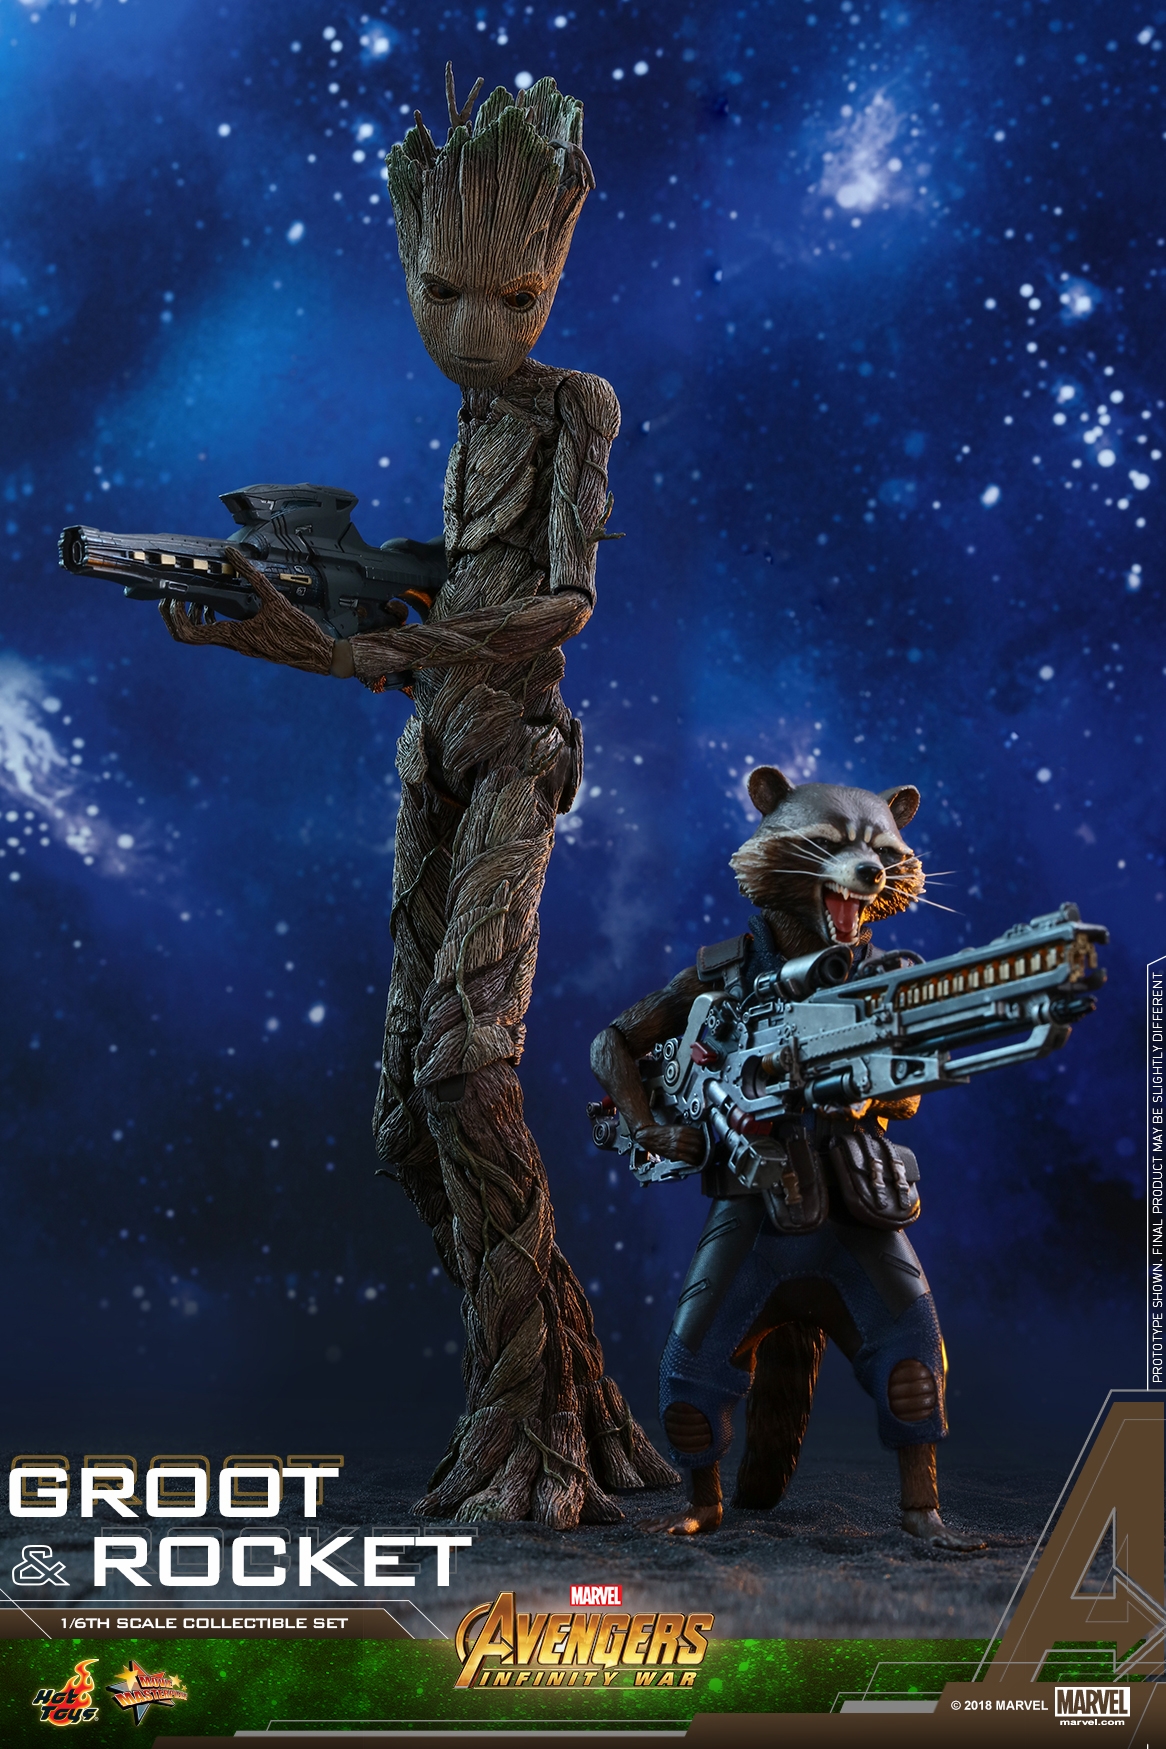 Hot Toys - AIW - Groot & Rocket collectible set_PR4.jpg